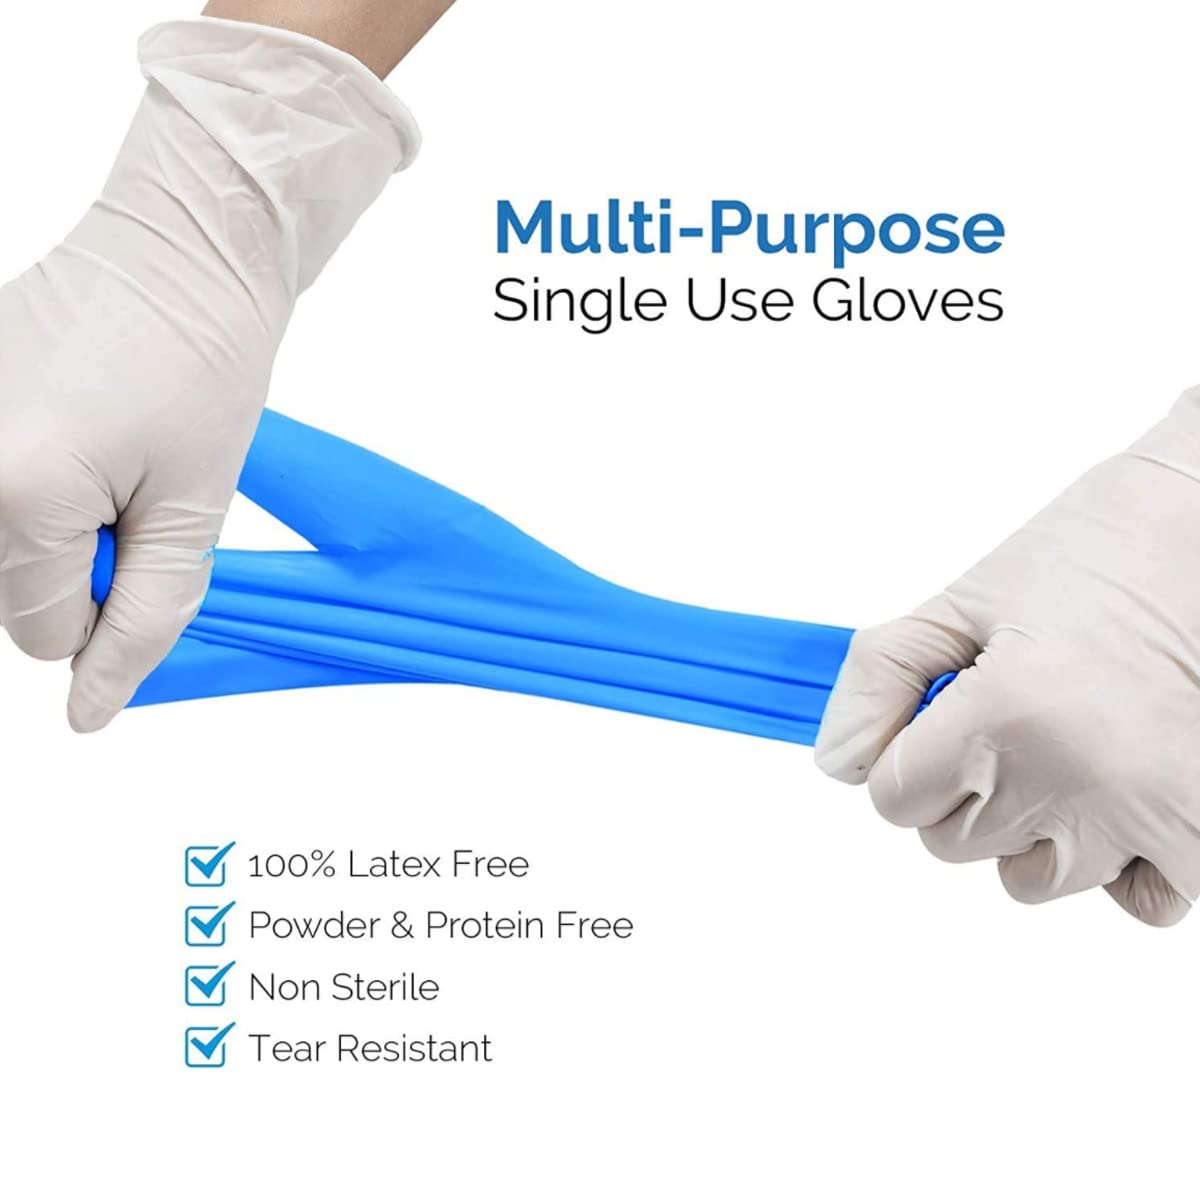 1000 PCS Basic Medical Synmax Vinyl Exam Gloves - Latex-Free & Powder-Free